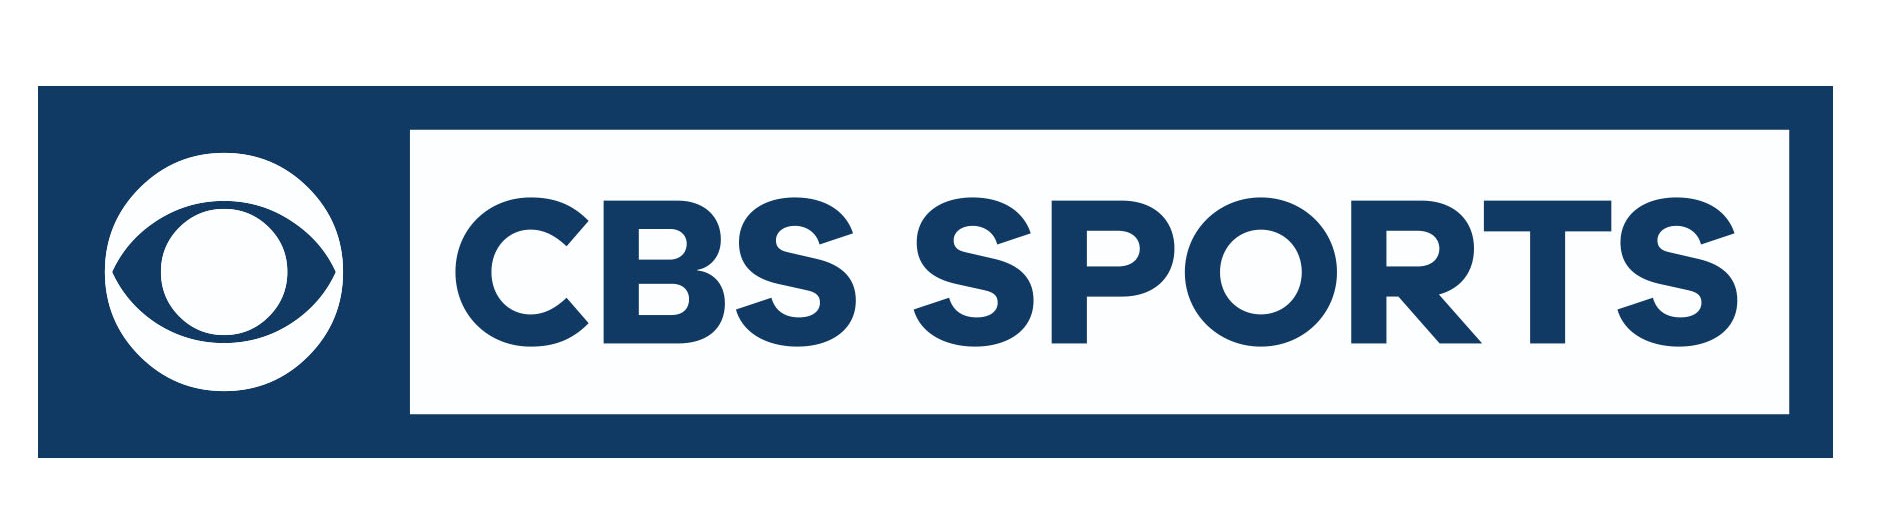 nfl on cbs logo